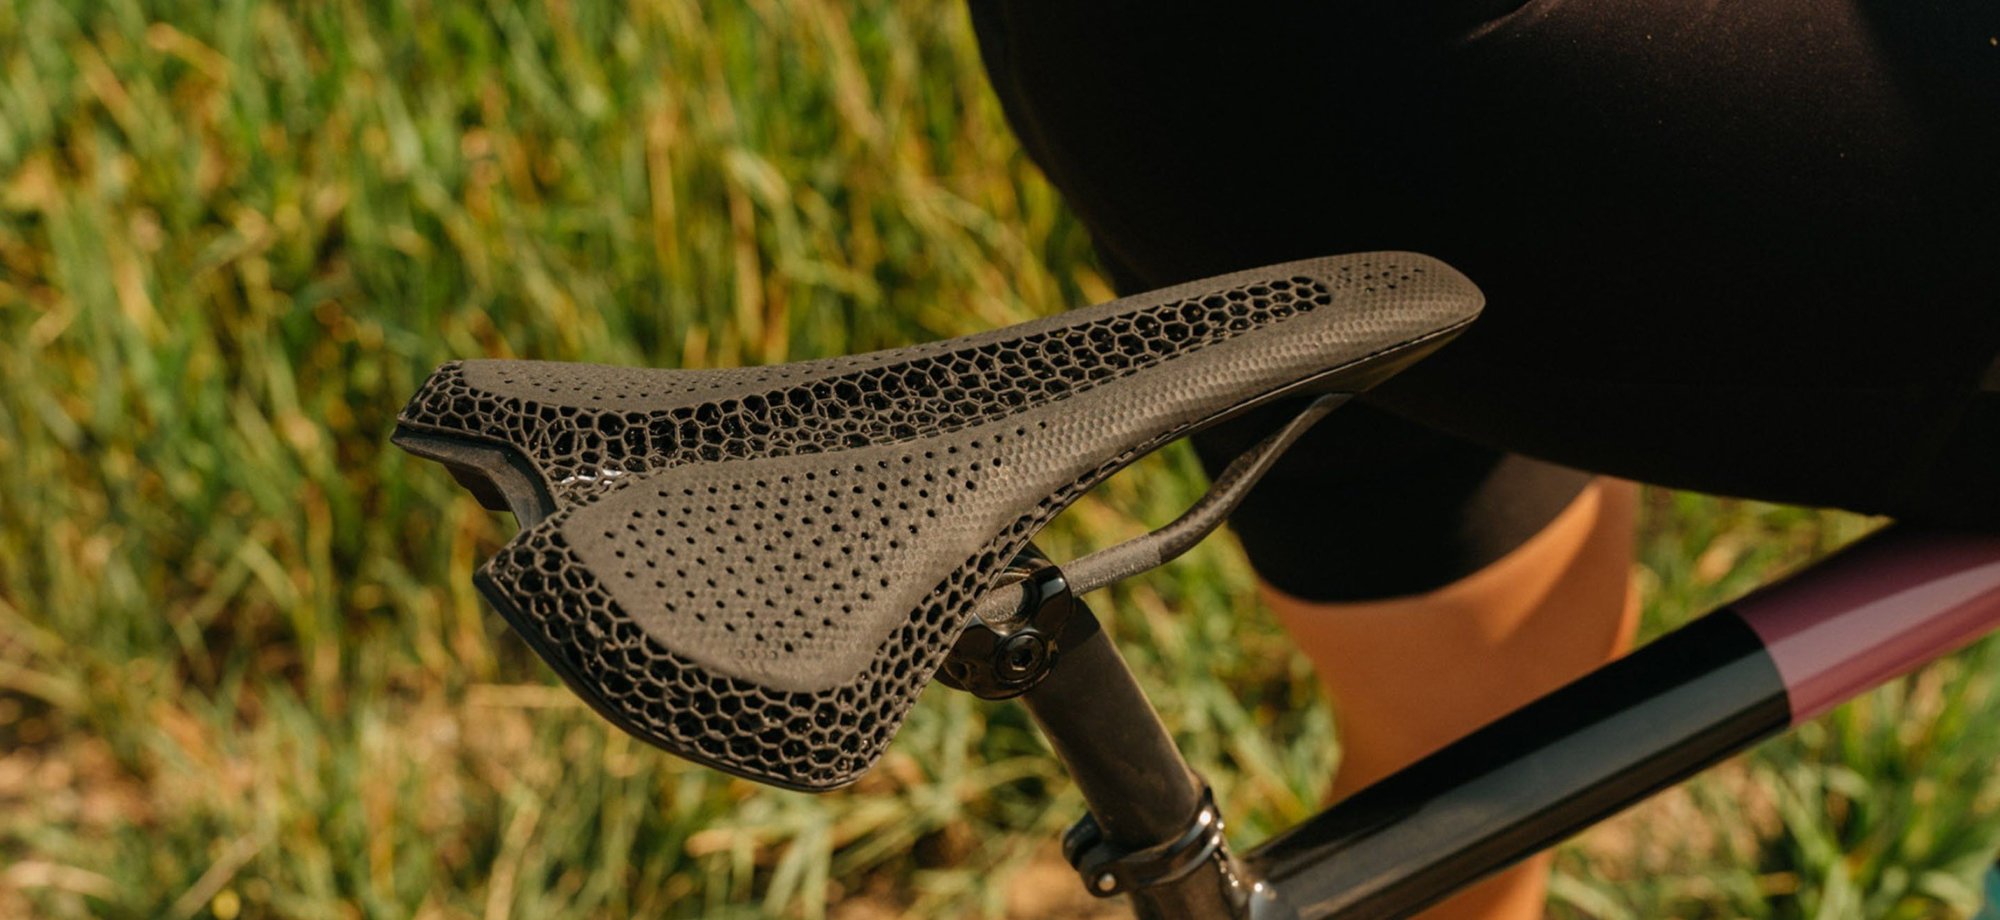 3d-printed bike saddle side view